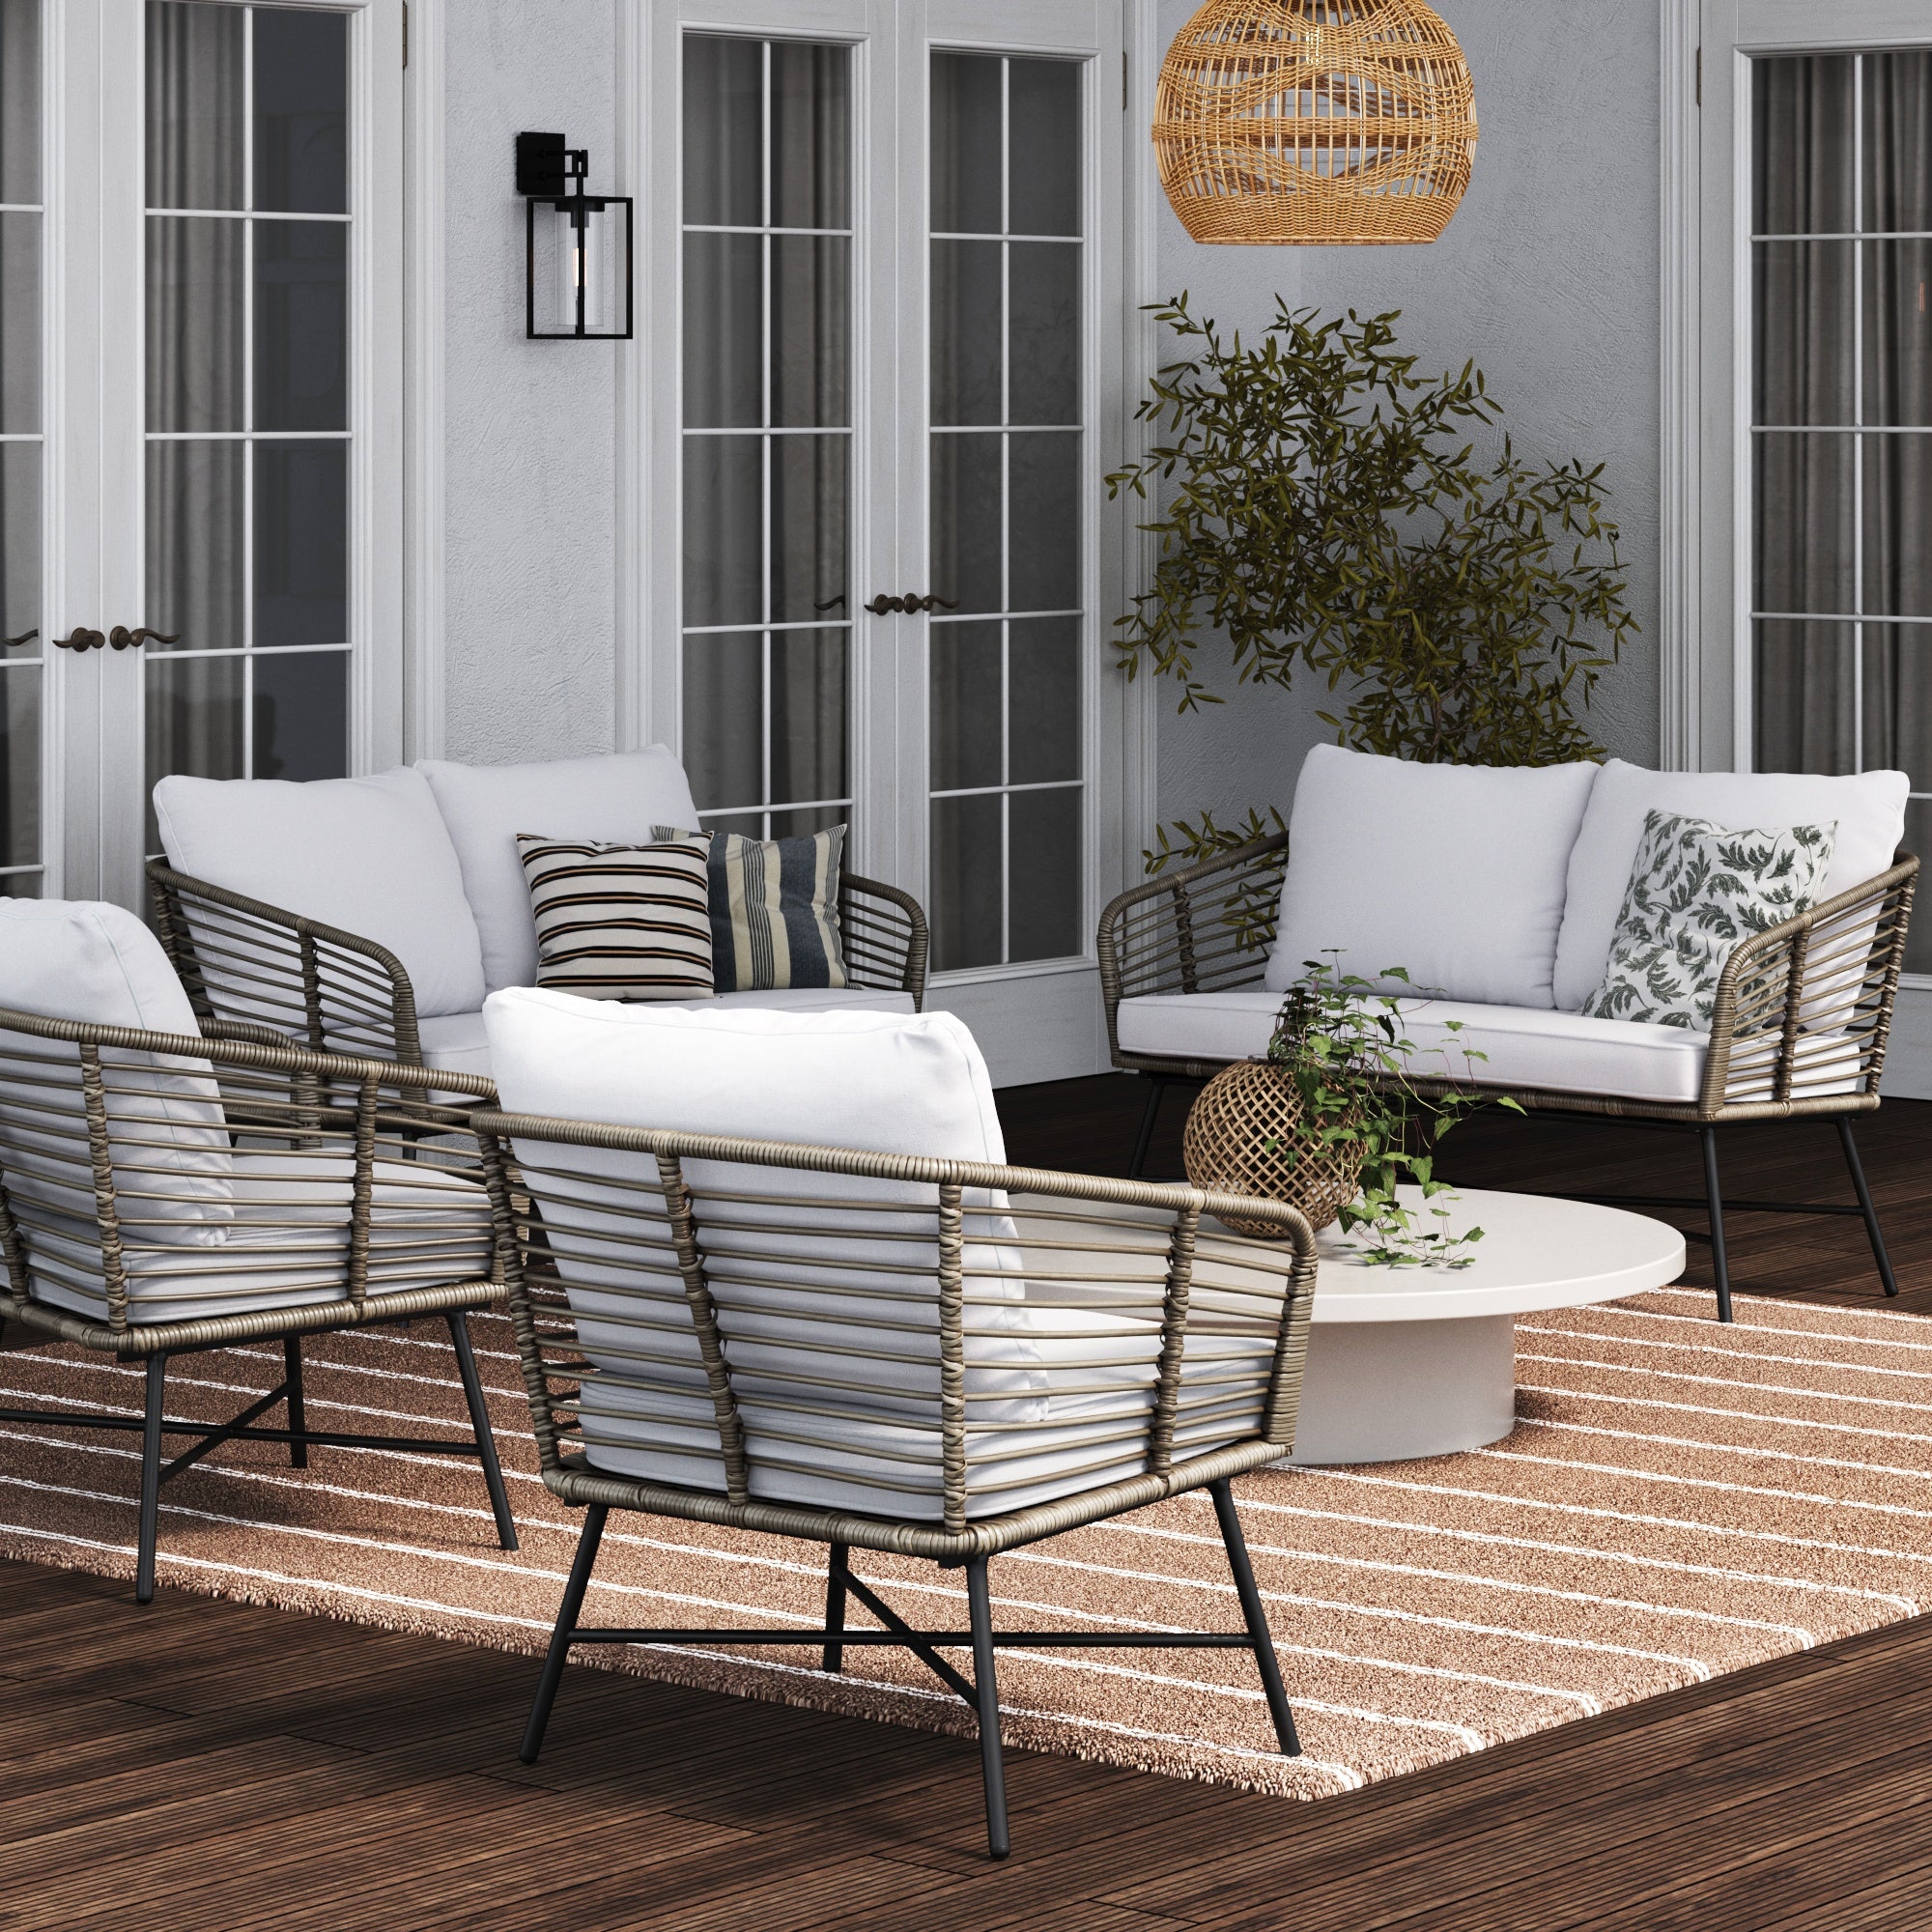 Set of 2 Outdoor Loveseats & 2 Chairs Light Gray